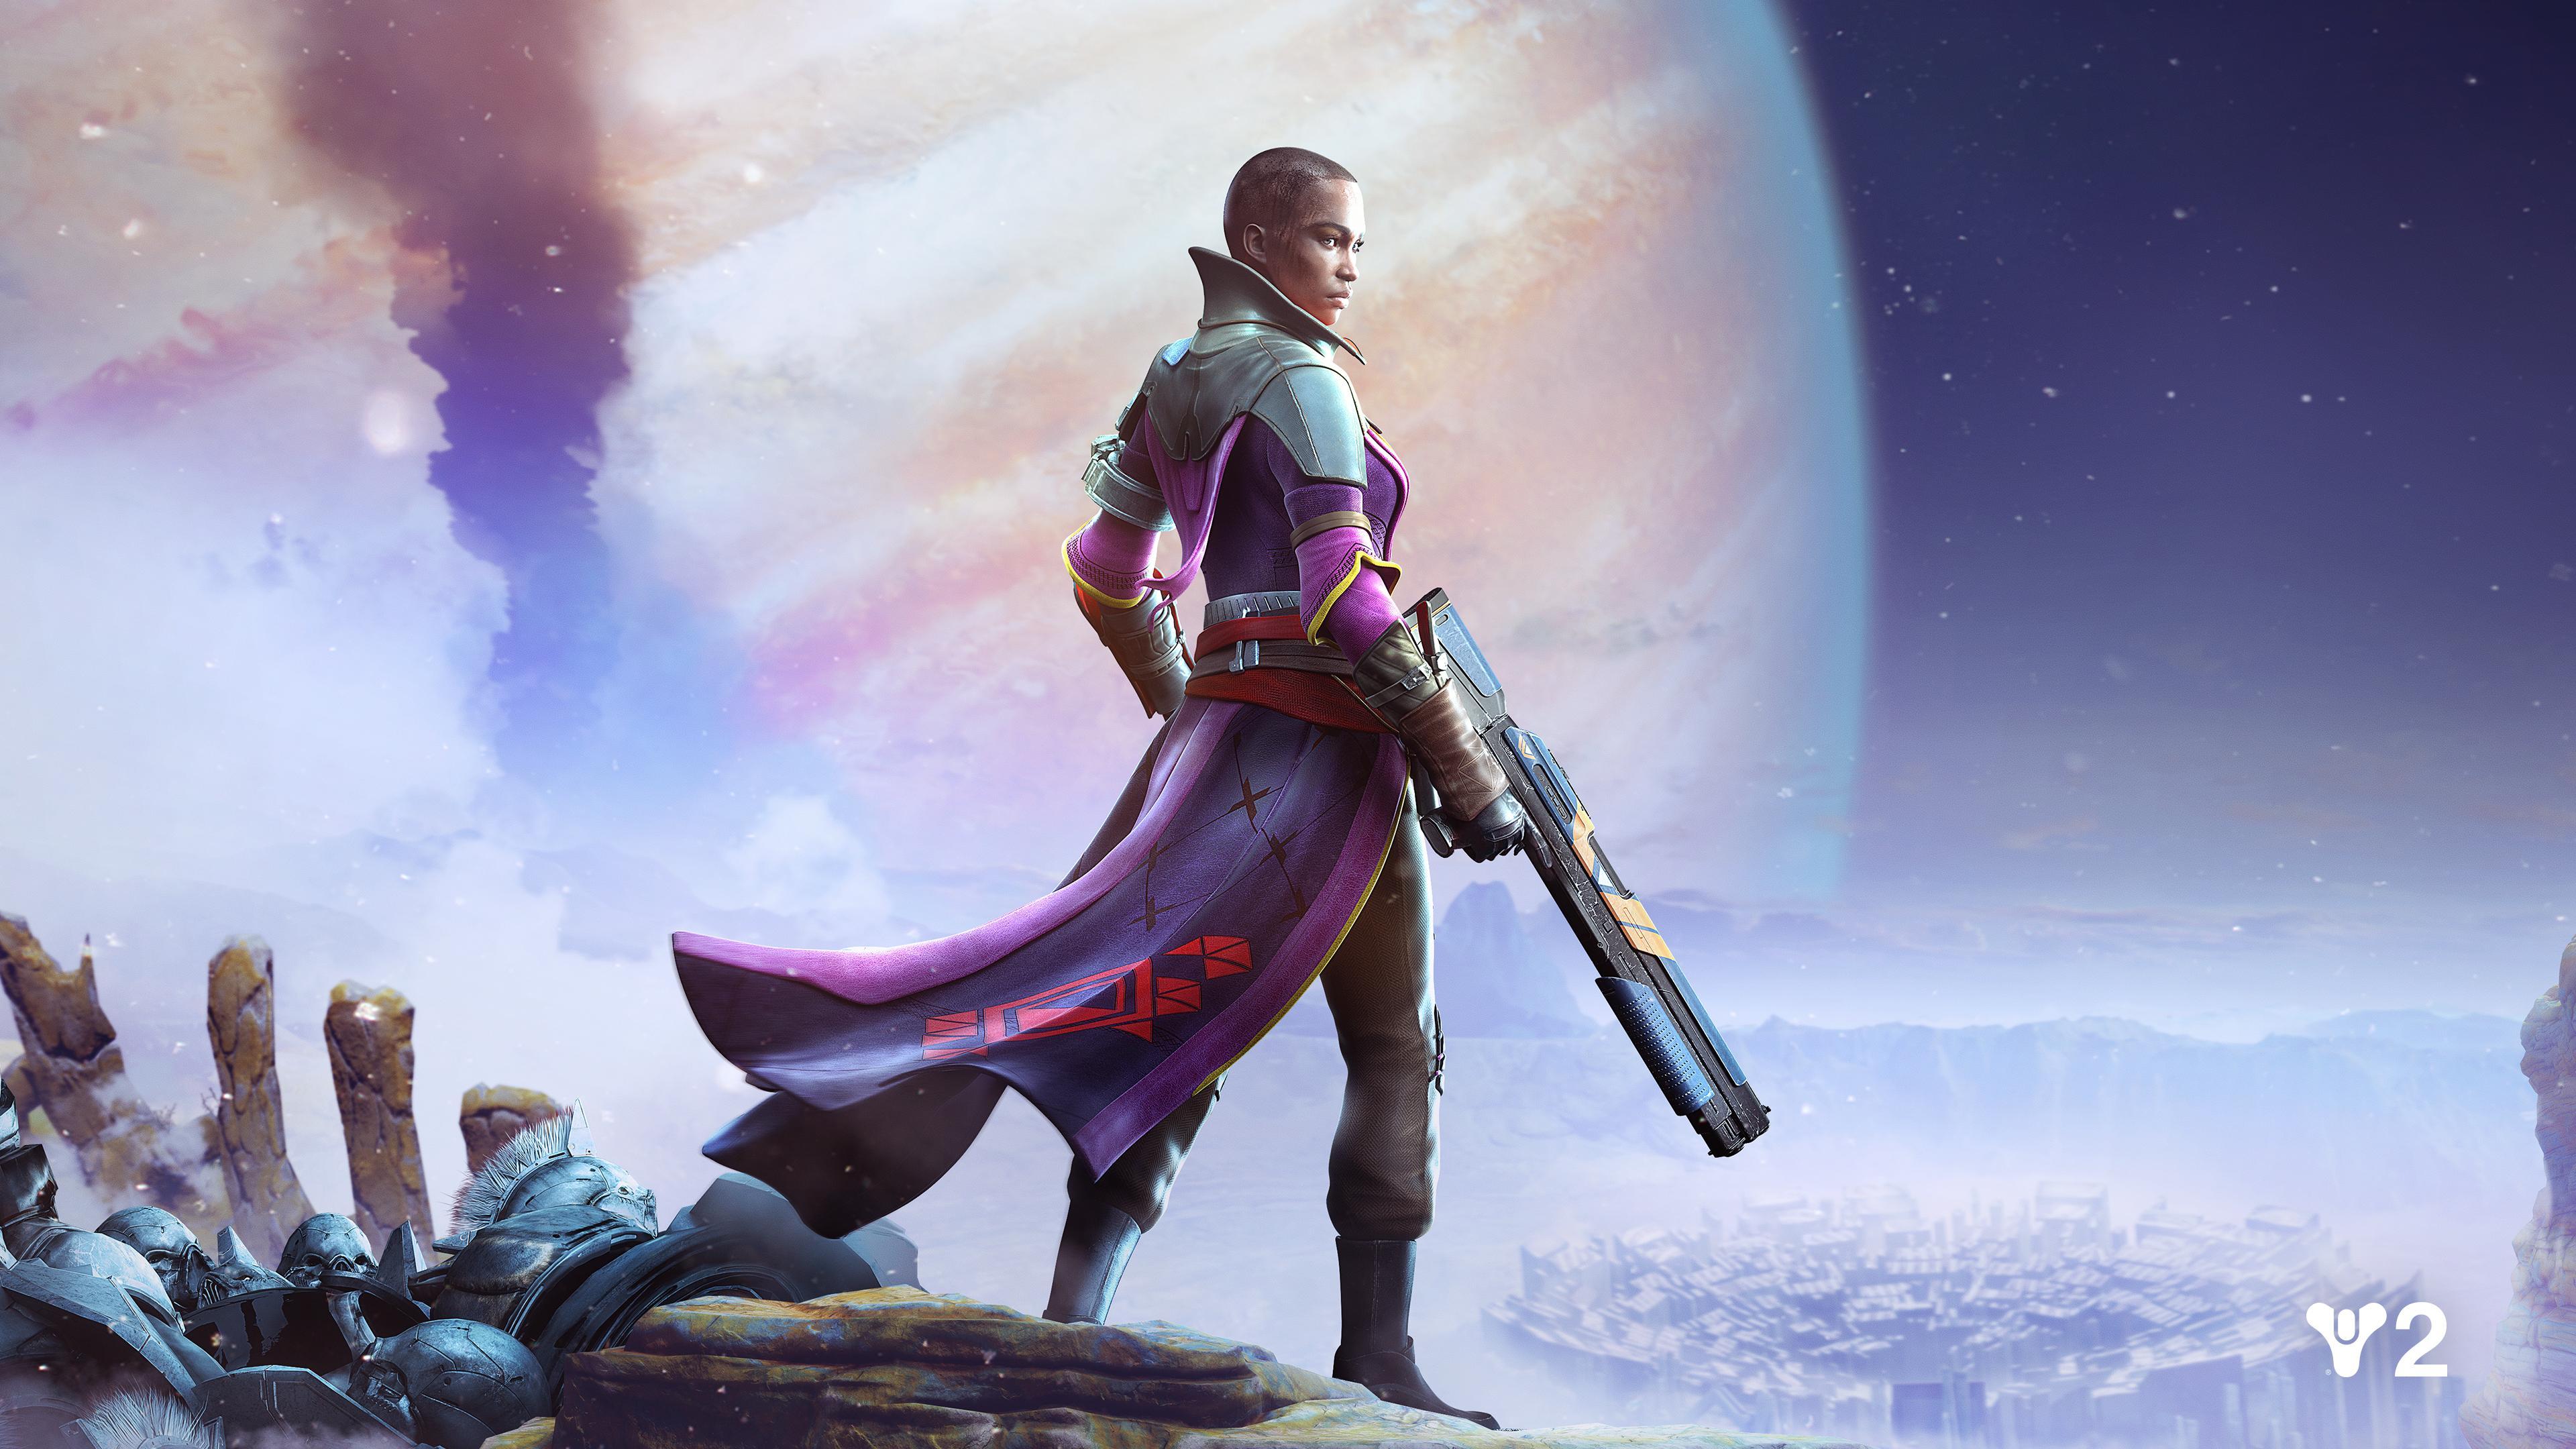 Destiny 2 Ikora Rey, HD Games, 4k Wallpaper, Image, Background